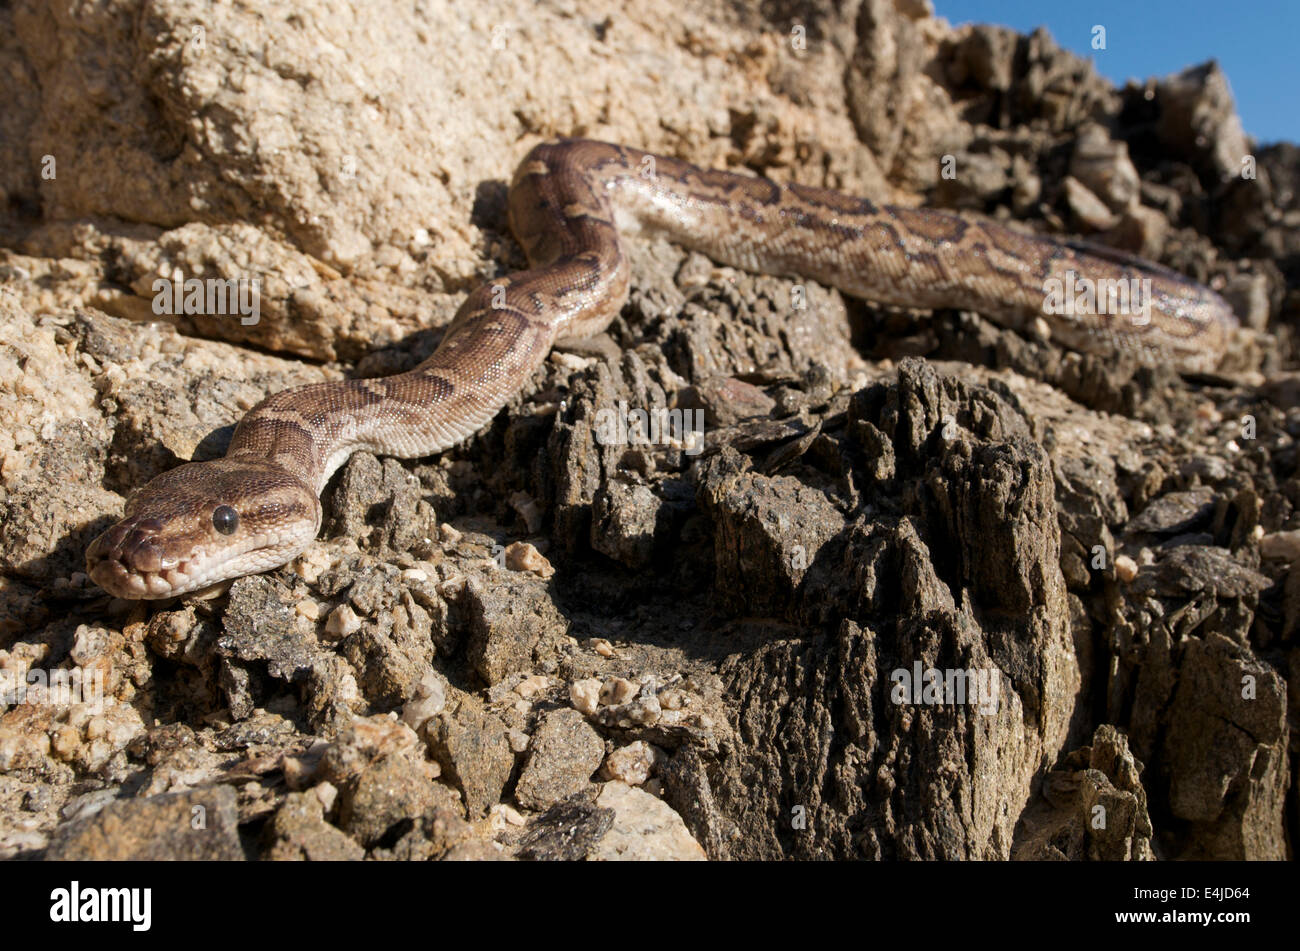 Angola python / Python anchietae Stock Photo